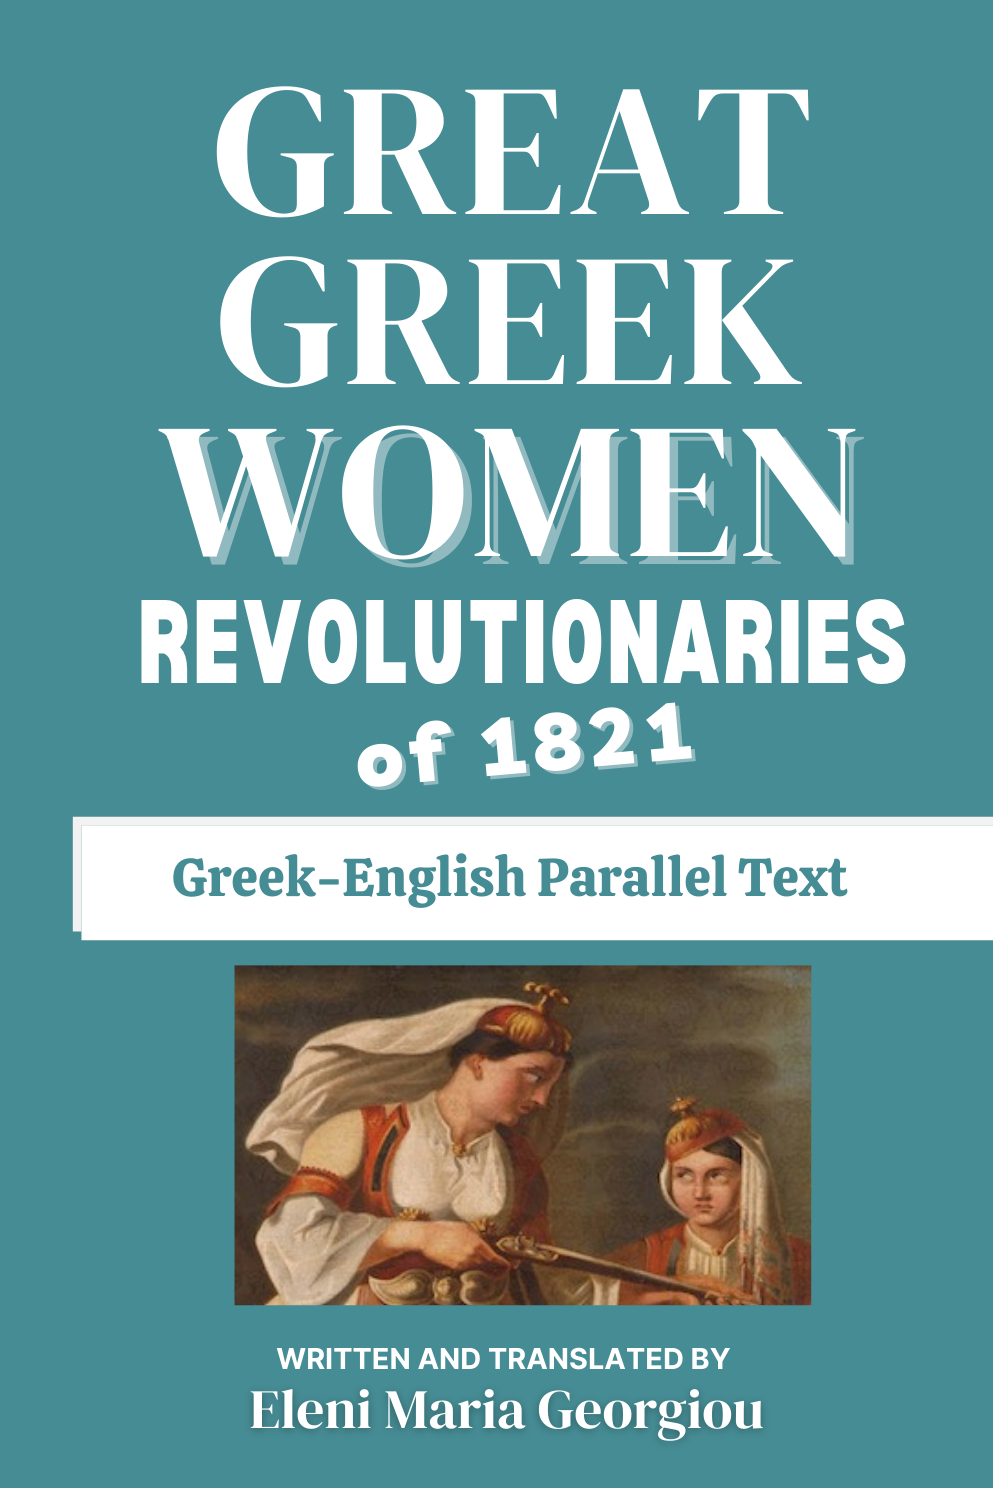 Great Greek Women Revolutionaries of 1821: Greek-English Parallel Text